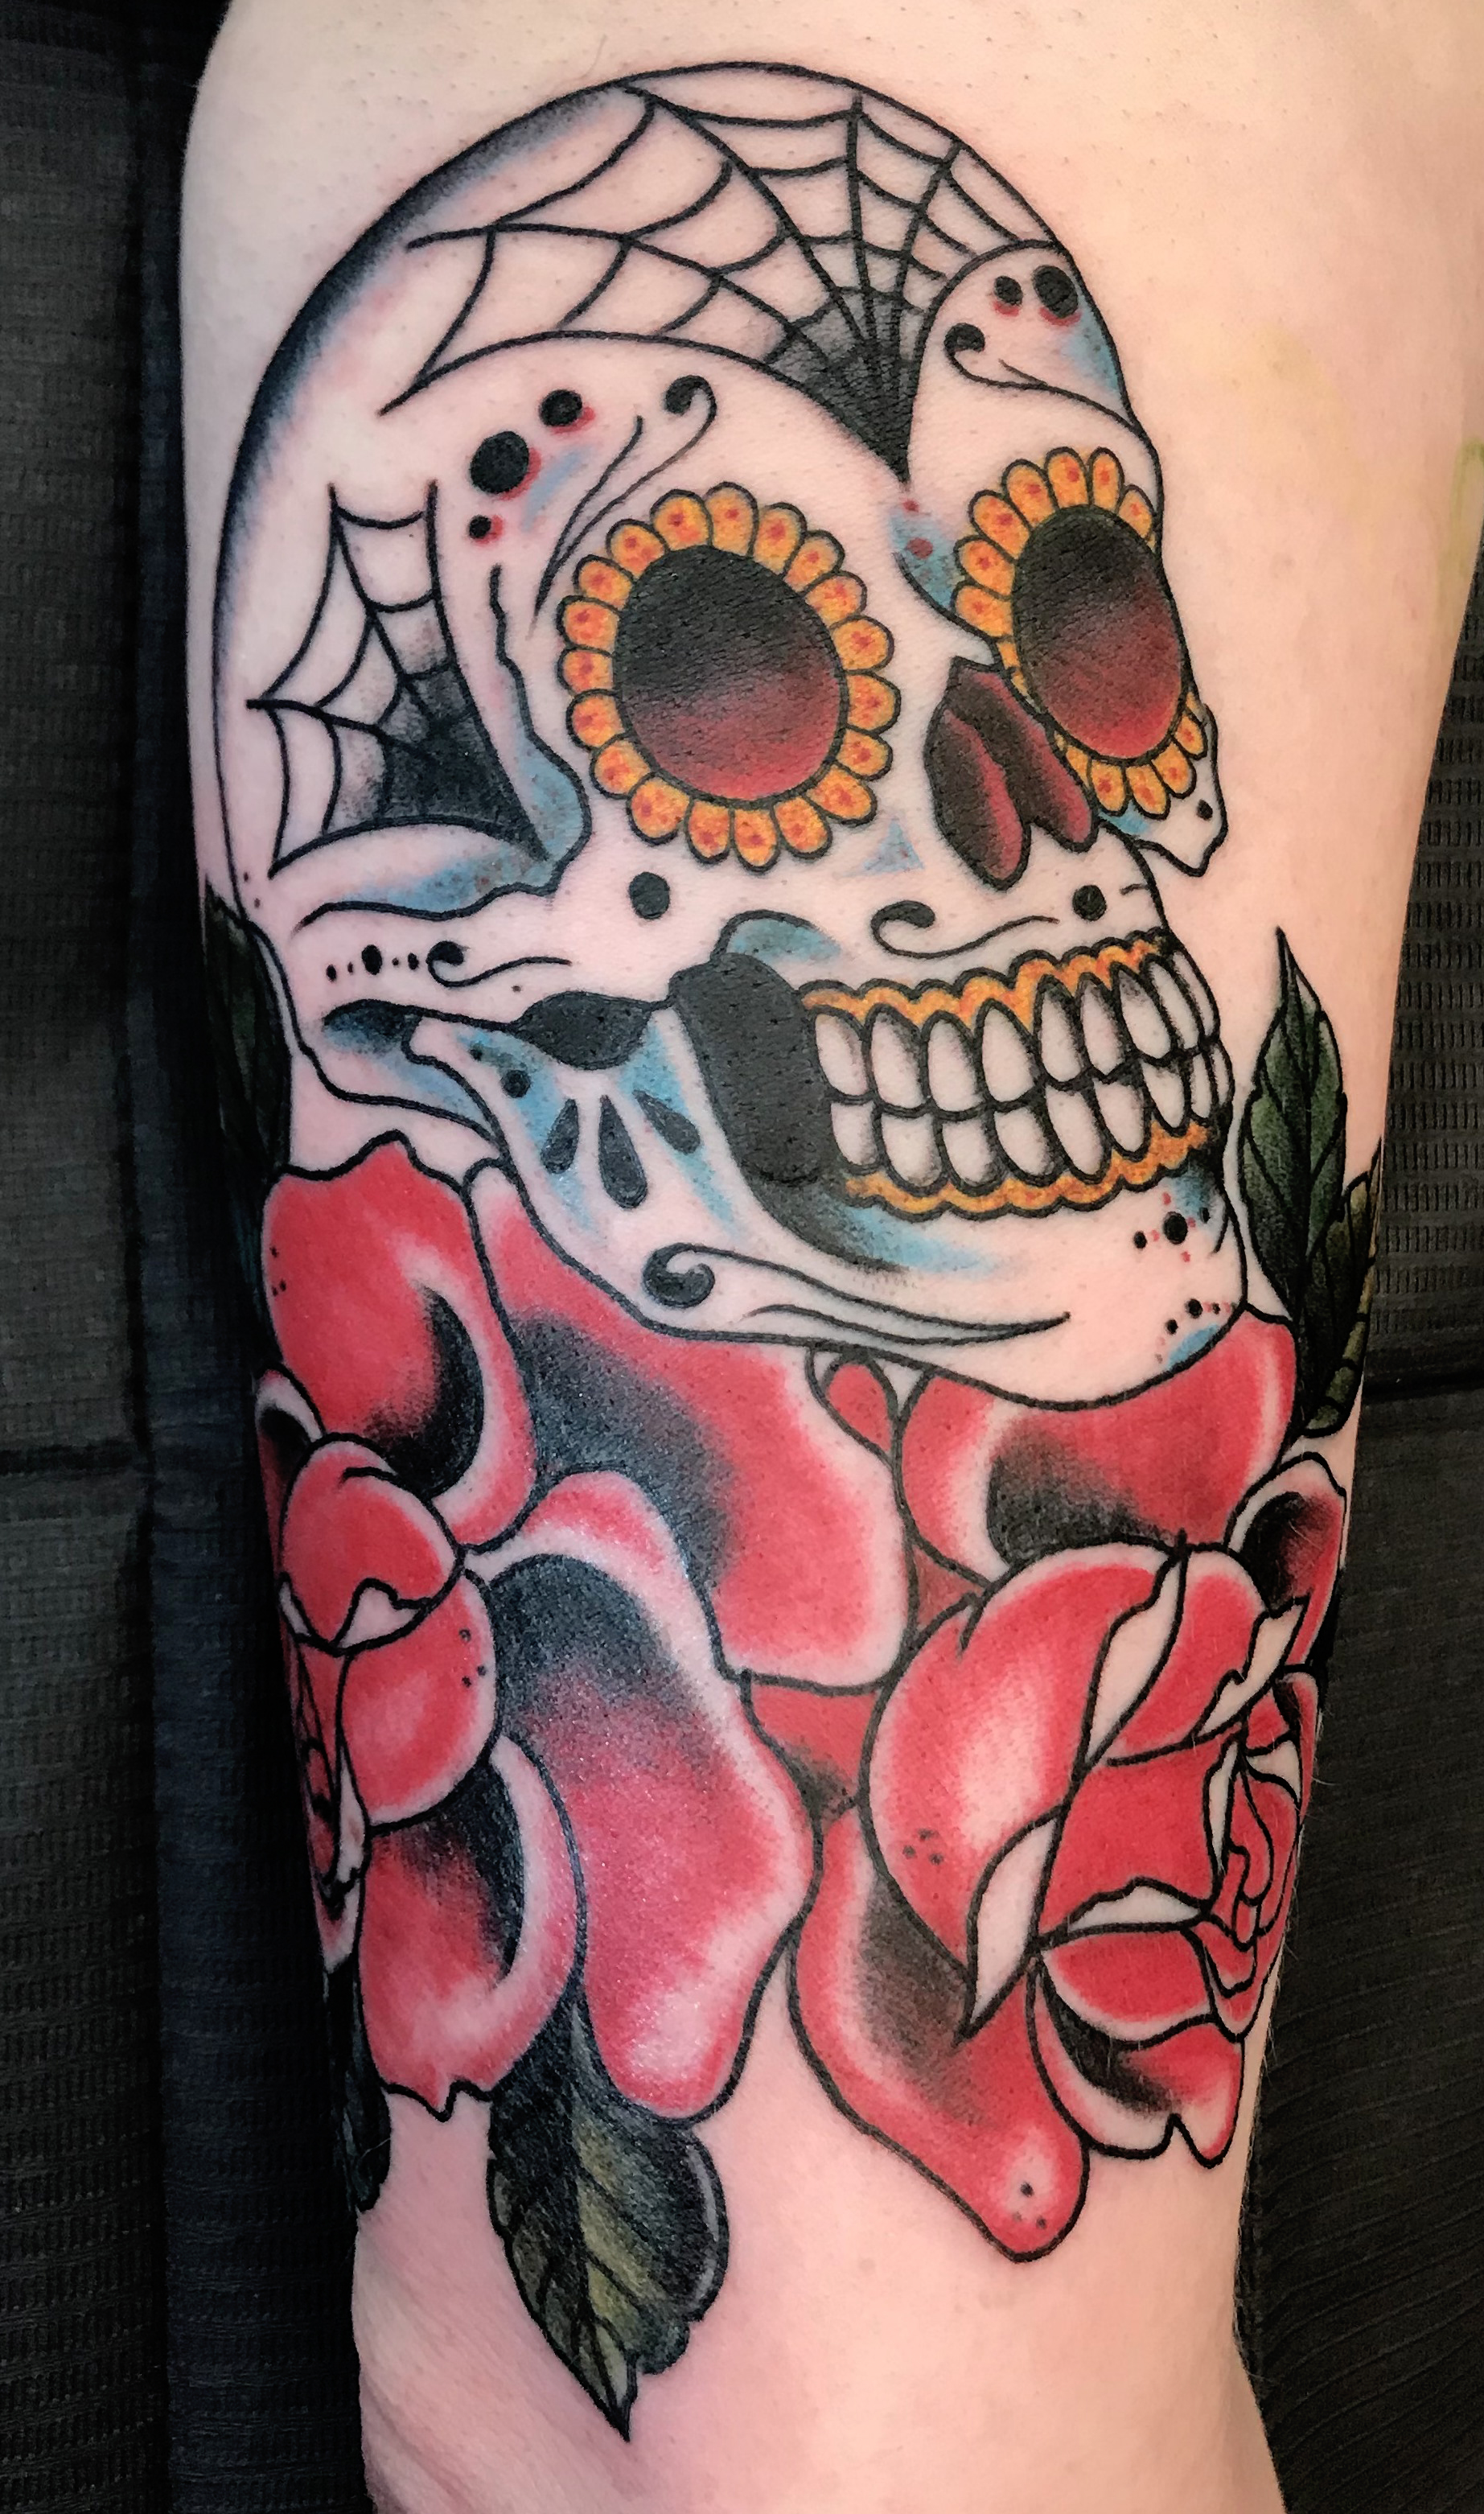 Ivan-Herrera-Tattoo-Berlin-Traditional-Classic-Mexican- Skull-Roses